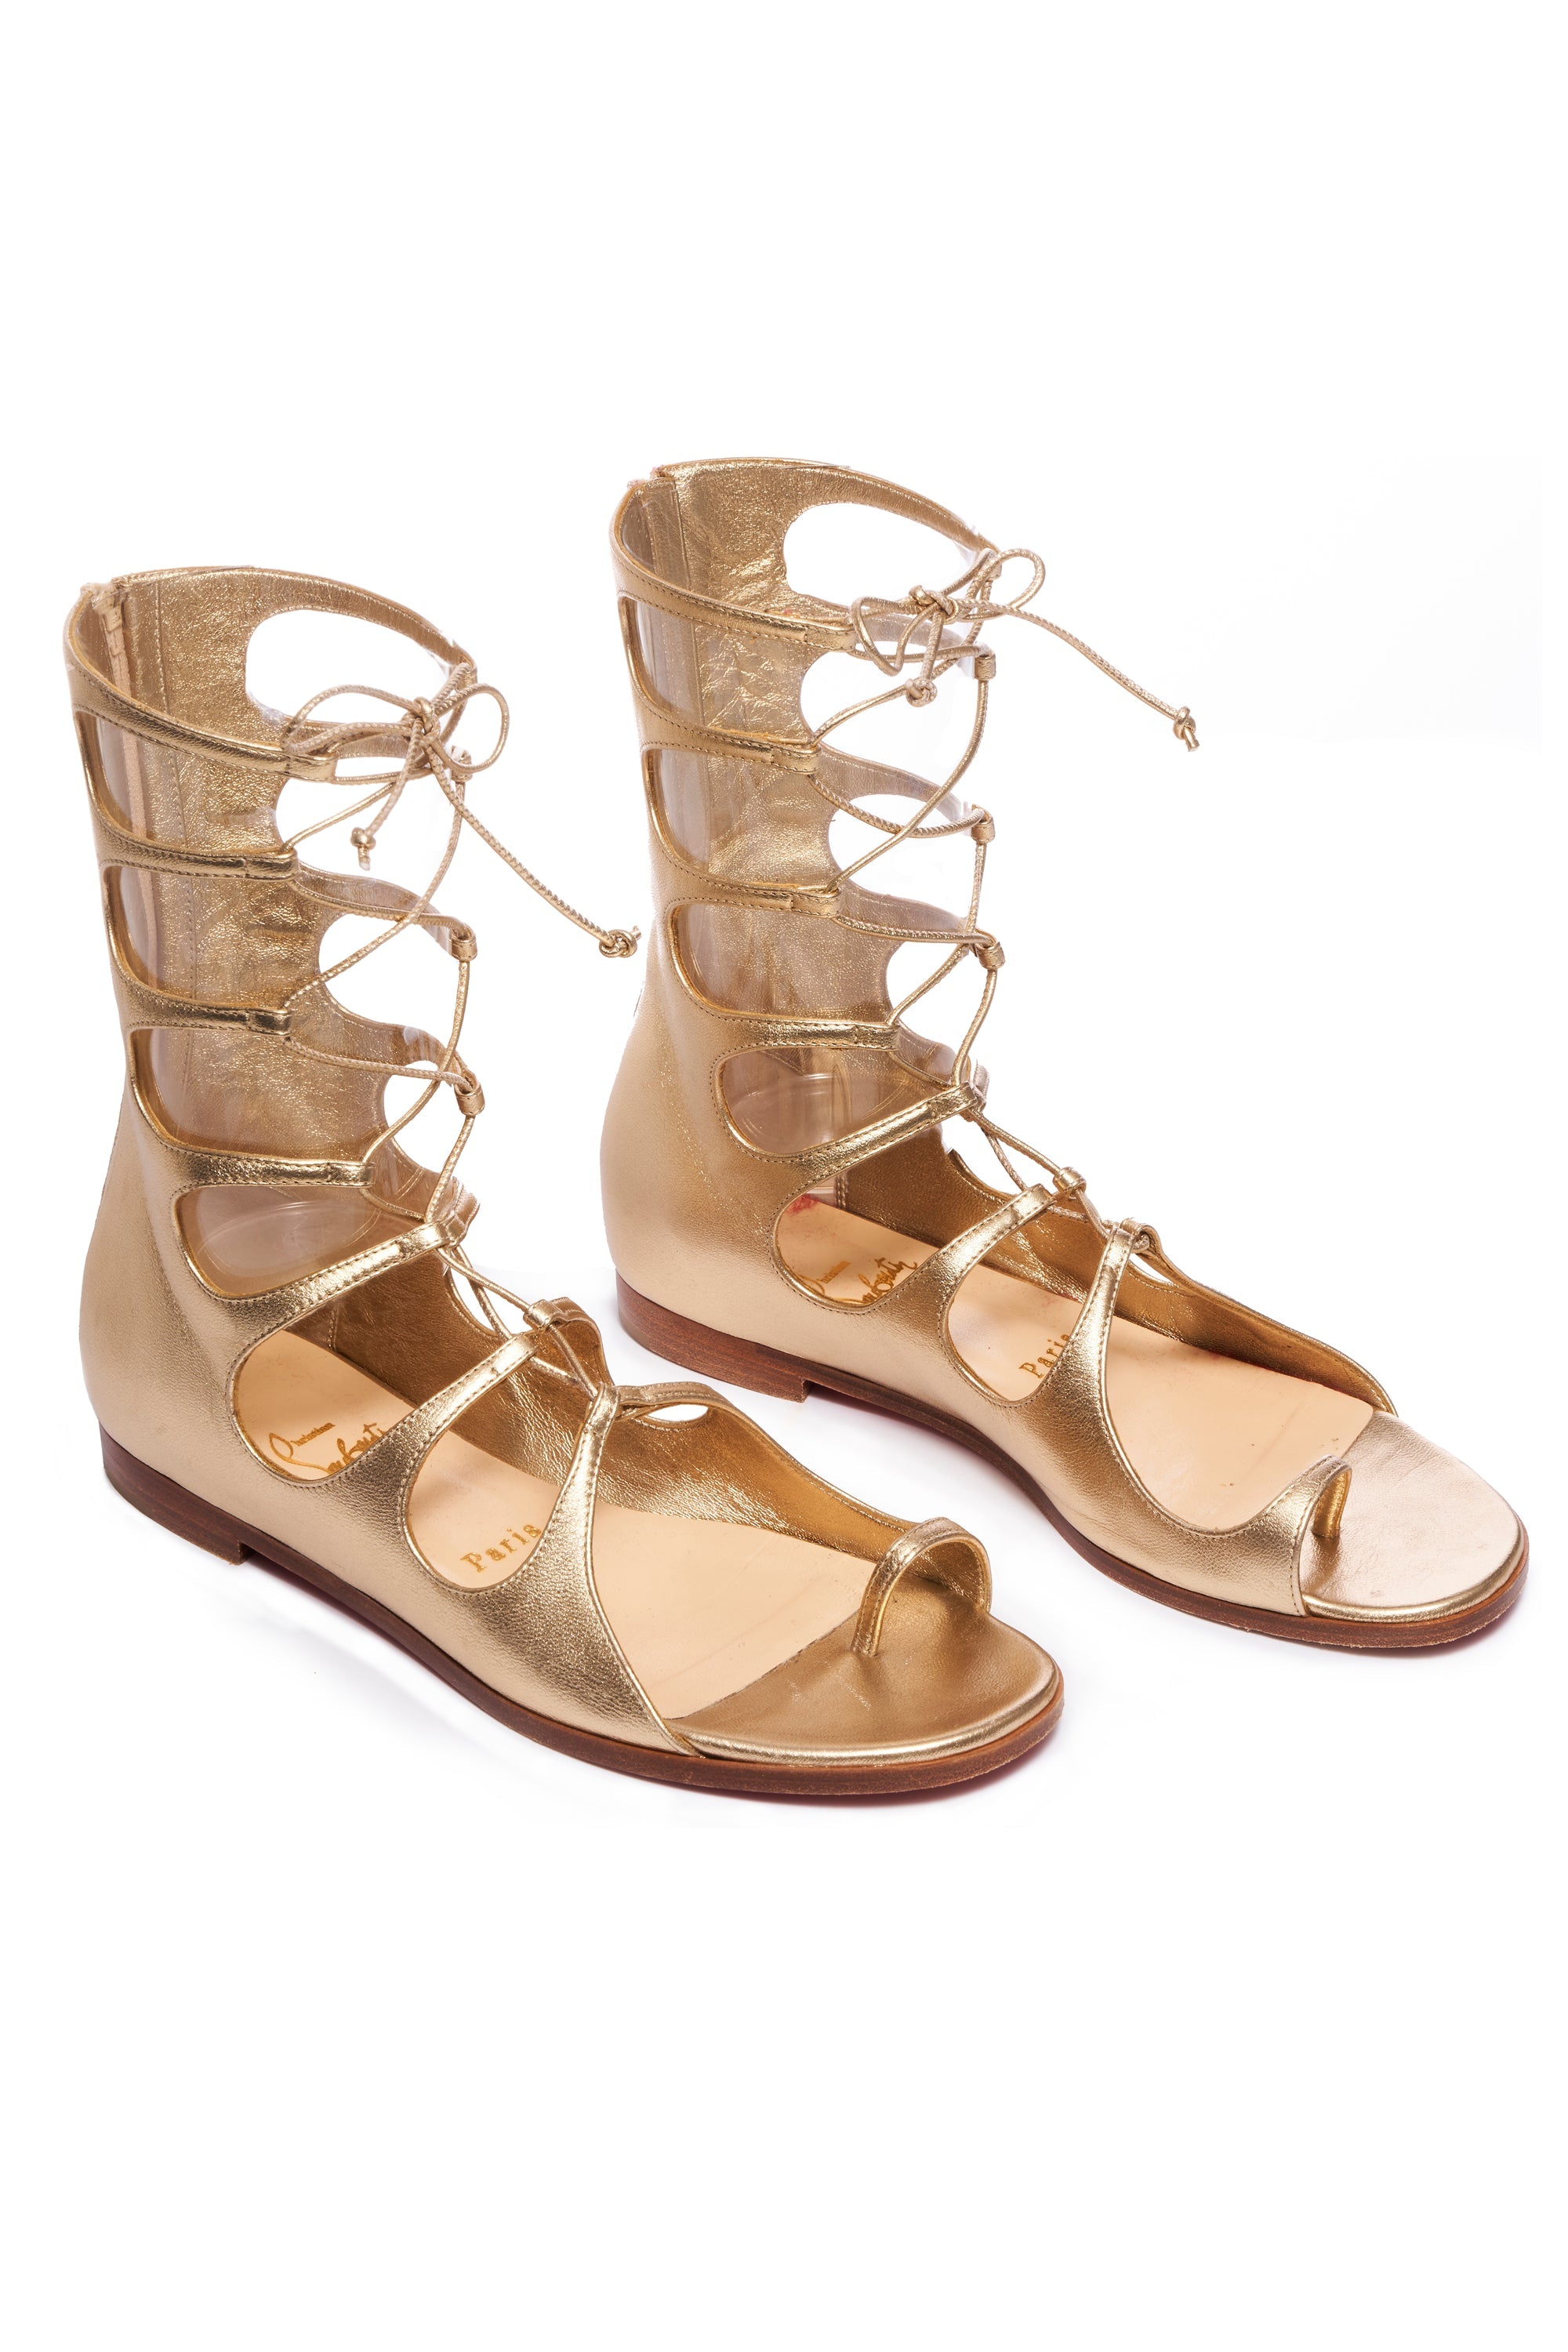 Christian Louboutin Gold Gladiator Sandals size 37